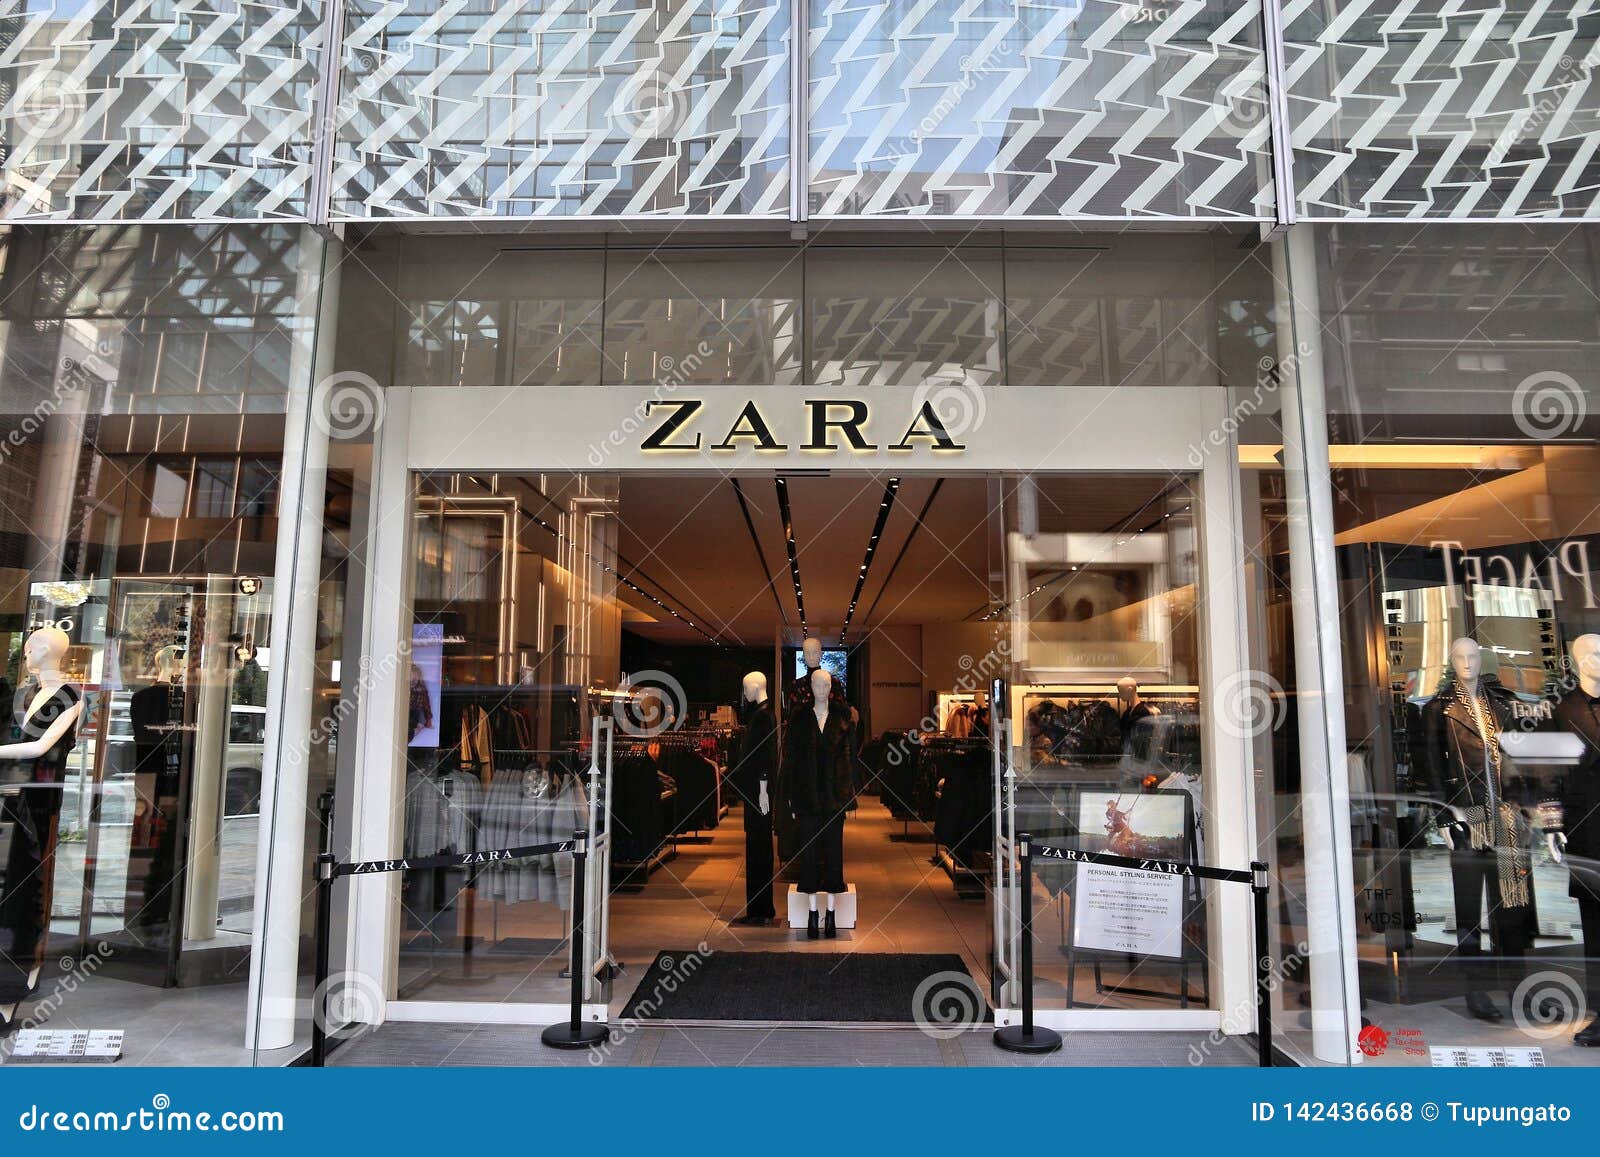 zara fashion company